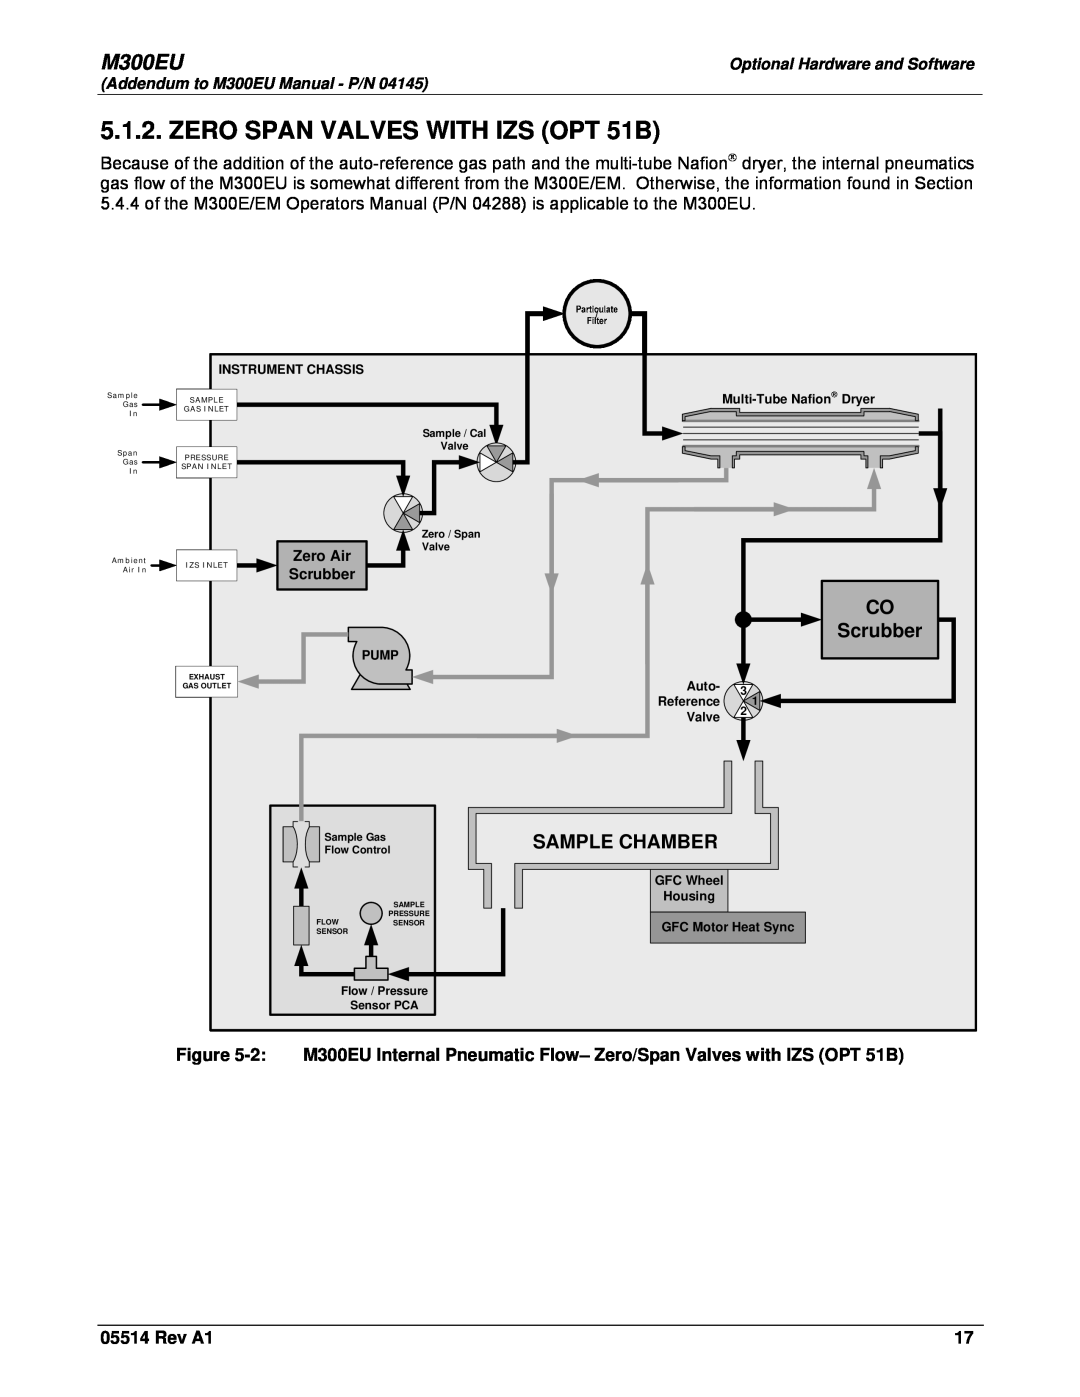 Teledyne Model 300EU manual ZERO SPAN VALVES WITH IZS OPT 51B, M300EU, Sample Chamber, Scrubber, Rev A1 